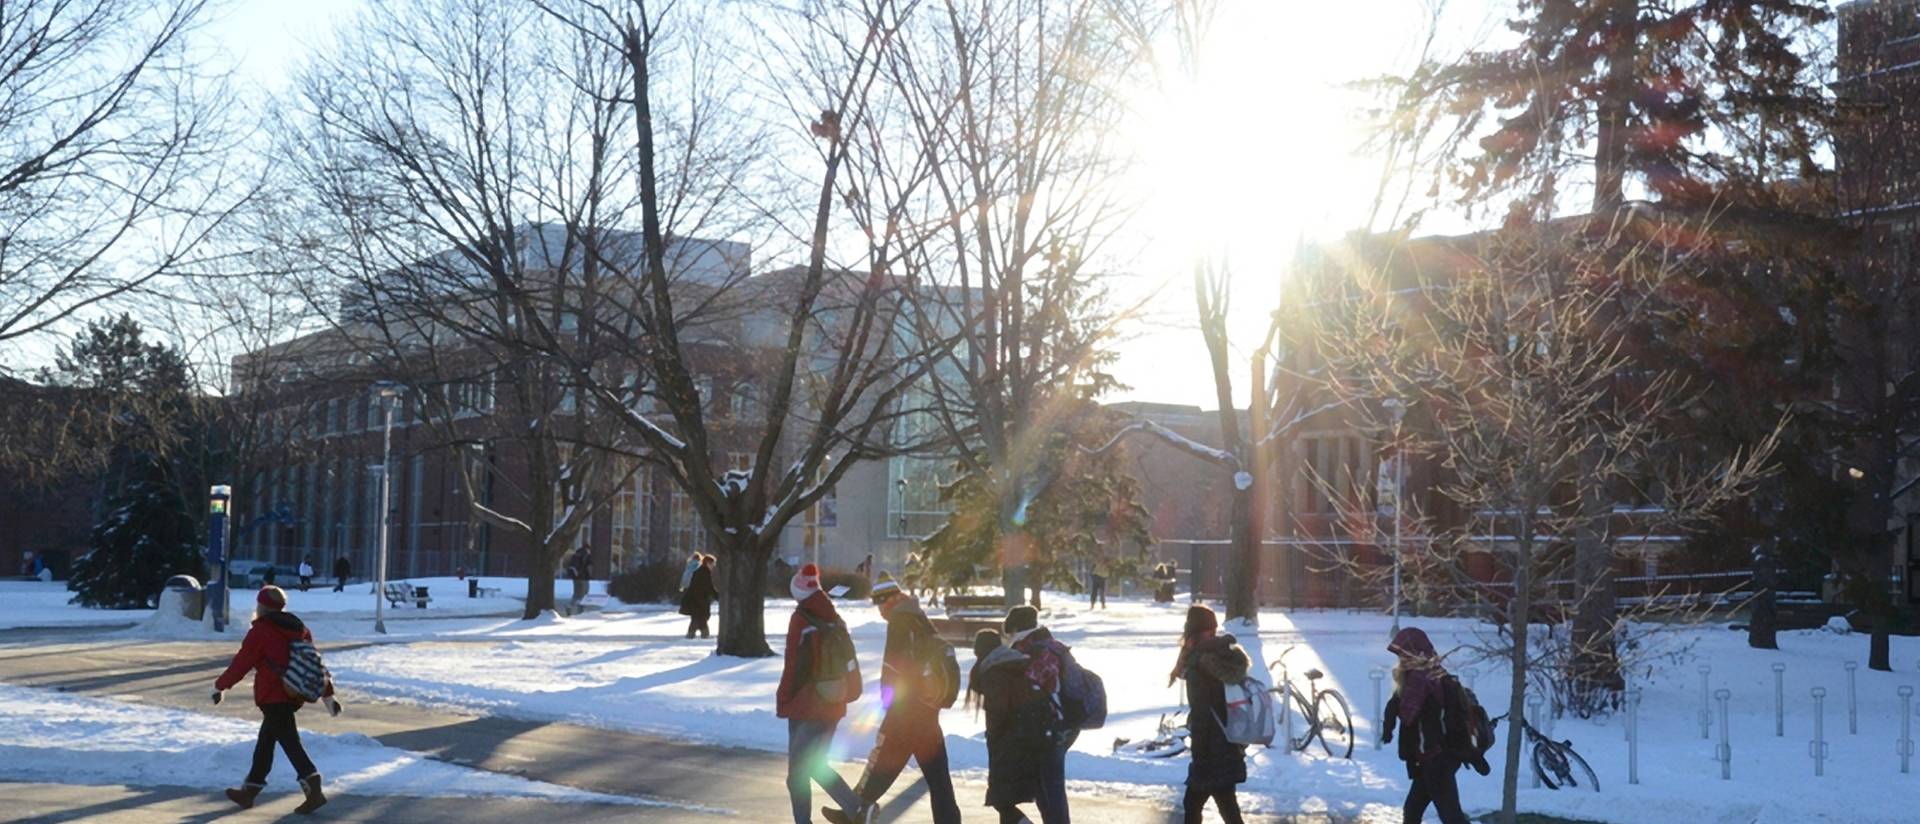 Winter campus photo